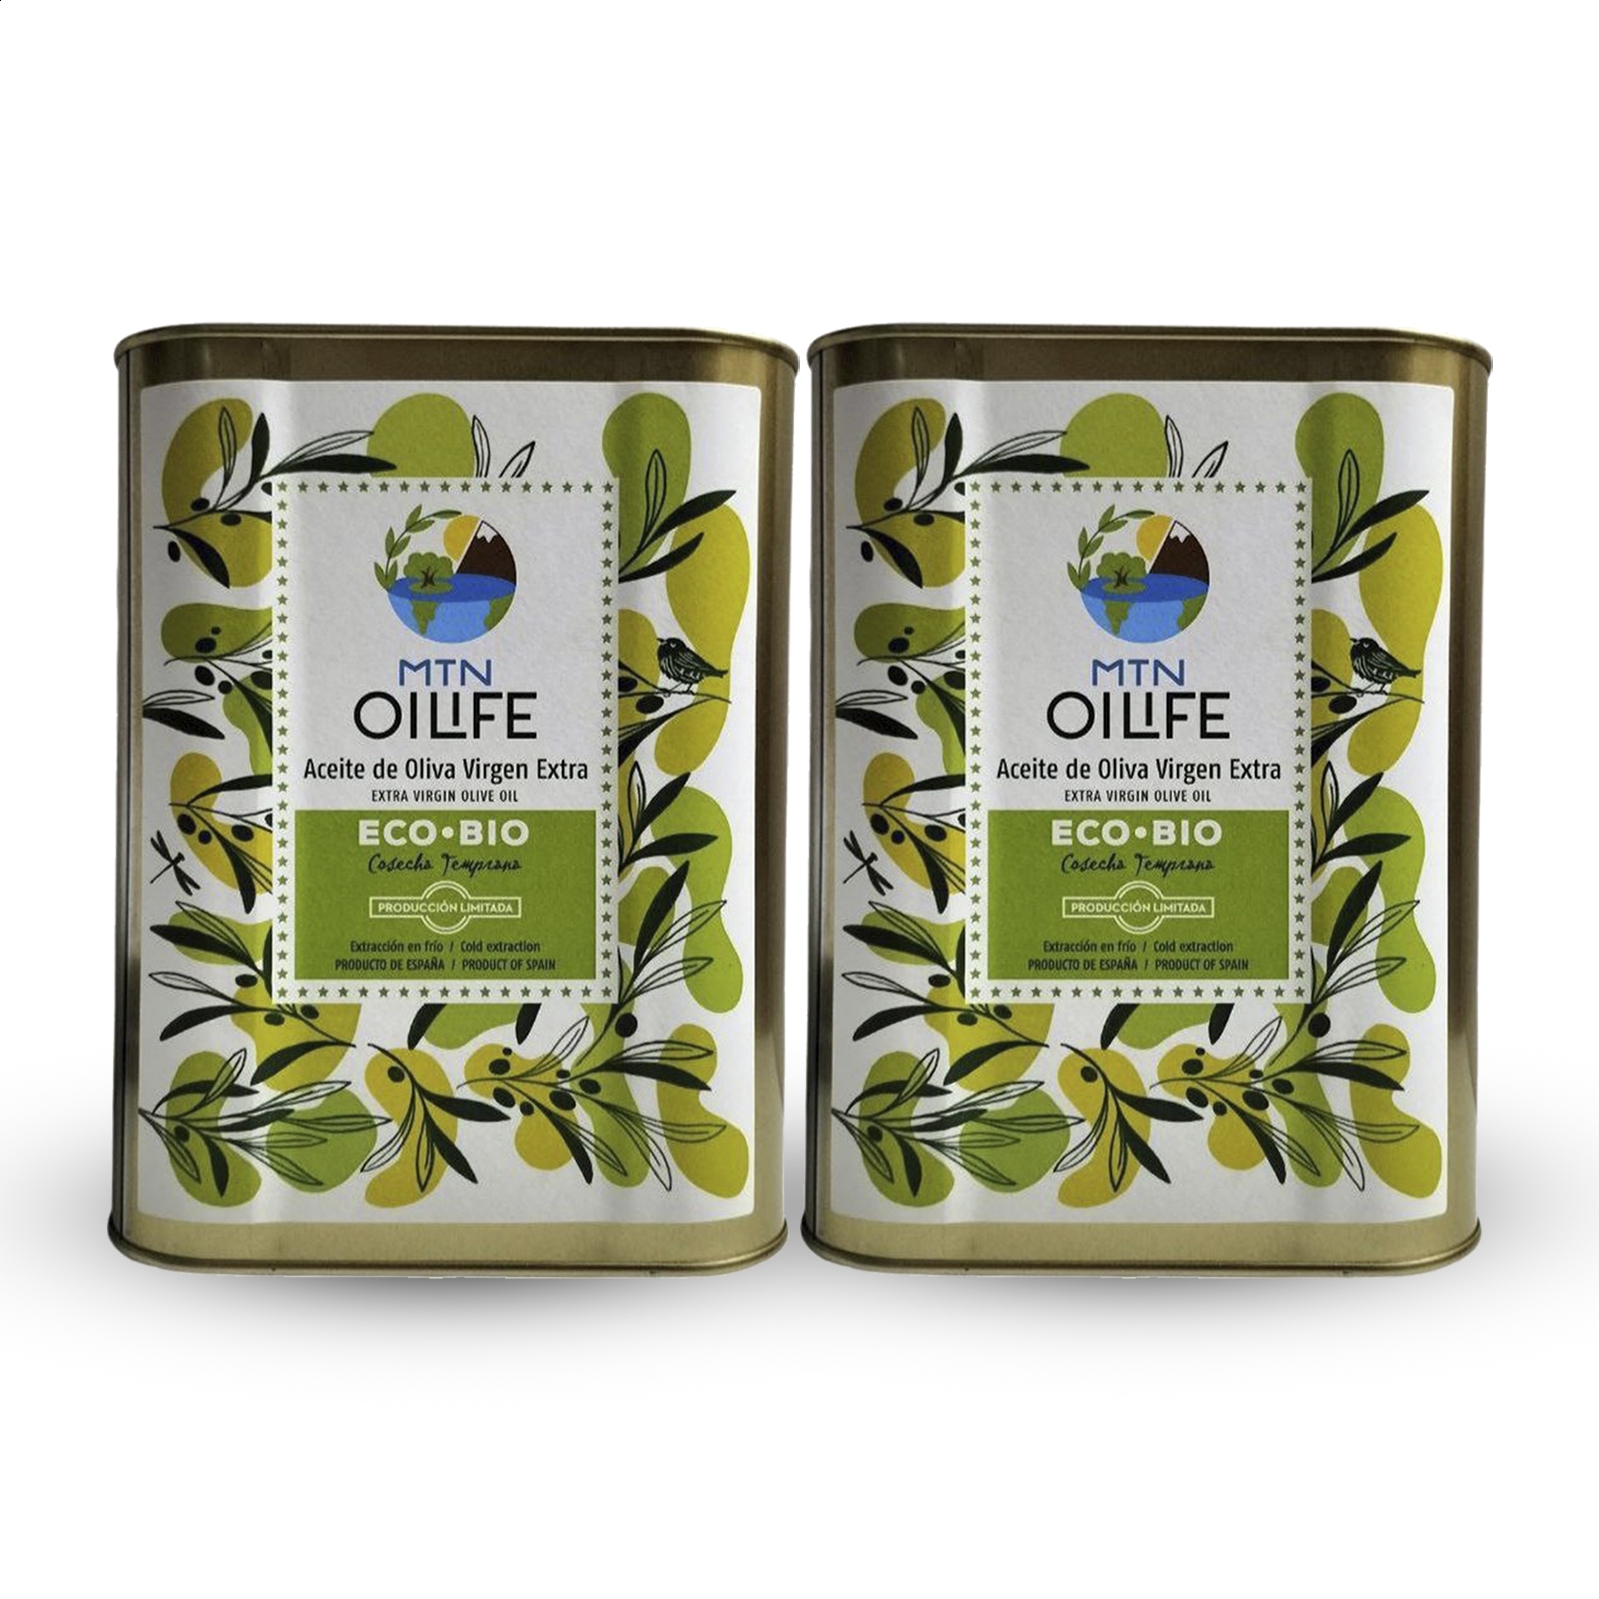 Oilife - AOVE Arbequina ecológico cosecha temprana 3L, 2uds